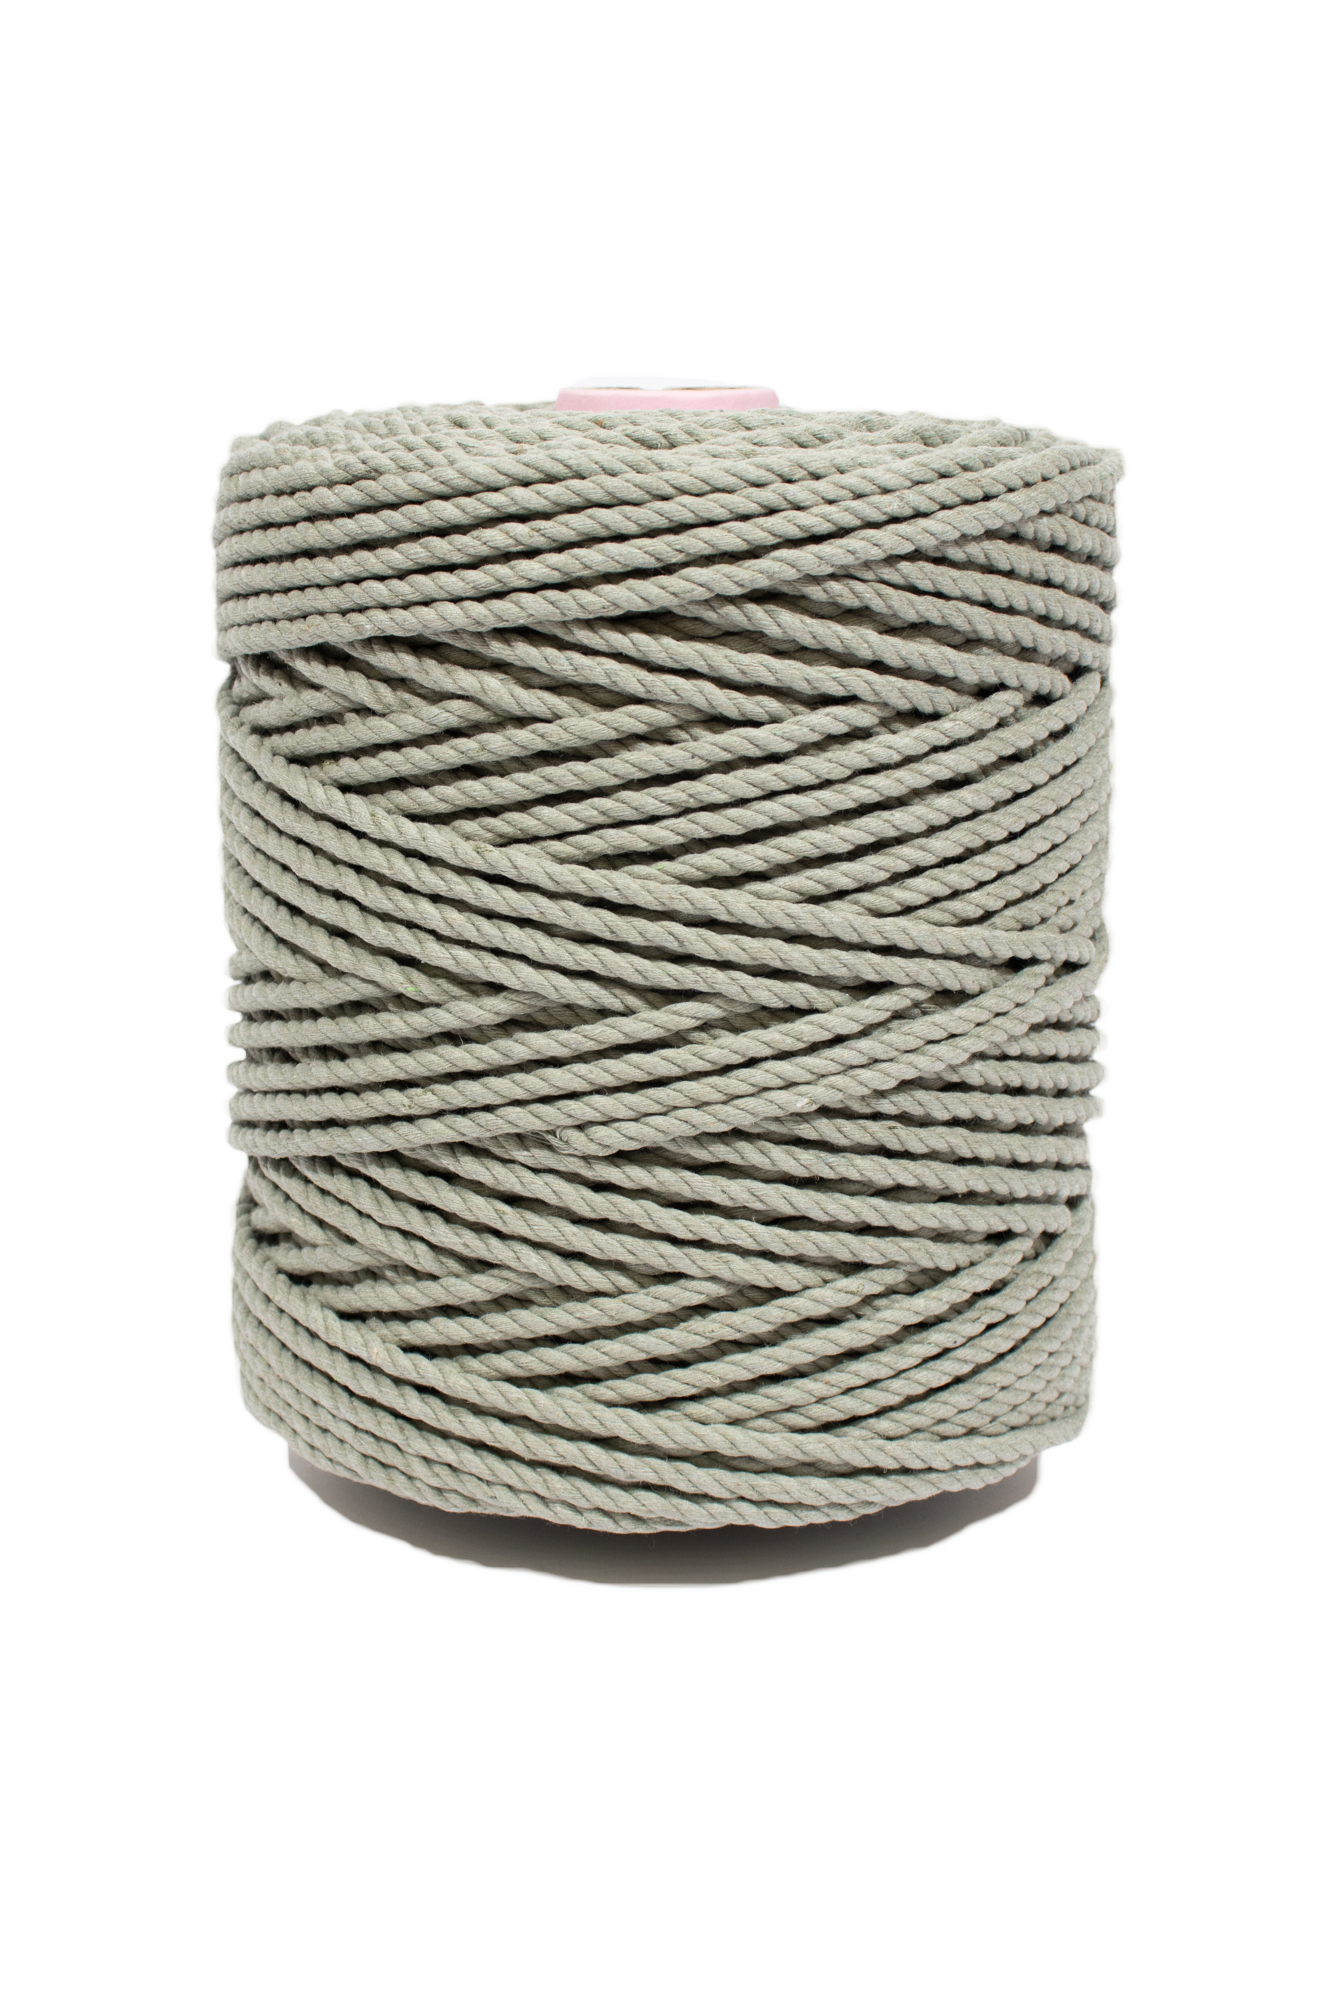 sage 5mm cotton rope 600' spool